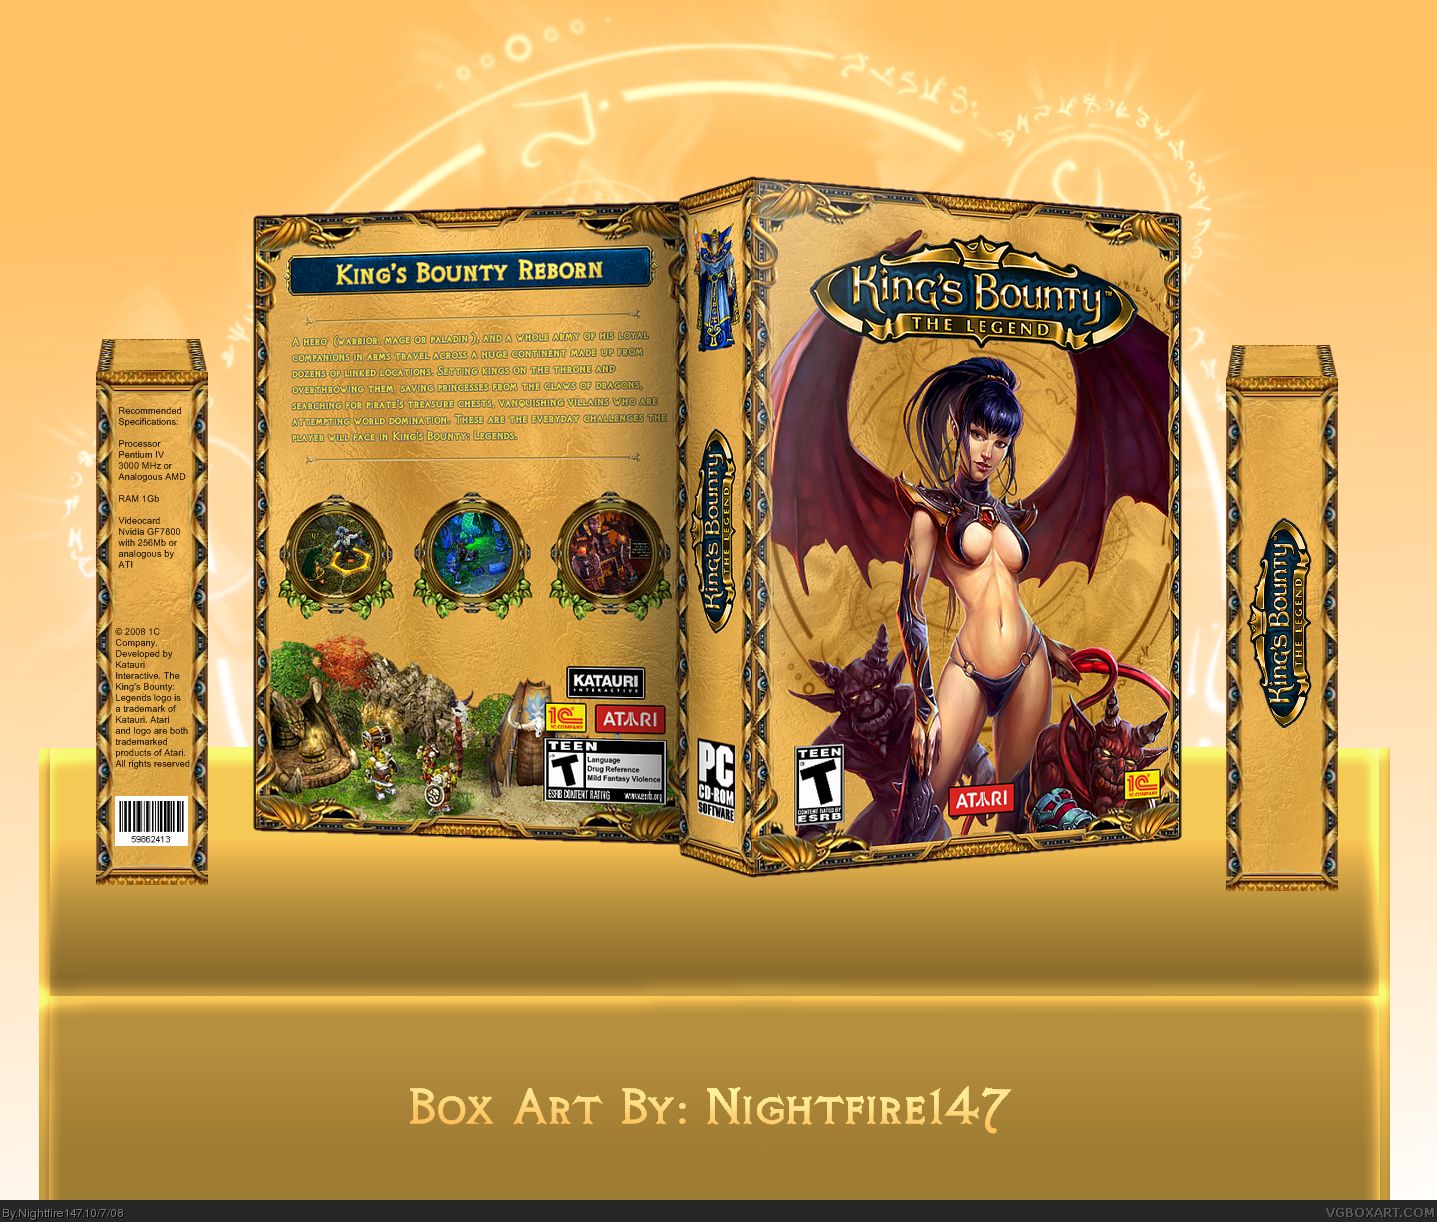 King's Bonty: Legends box cover